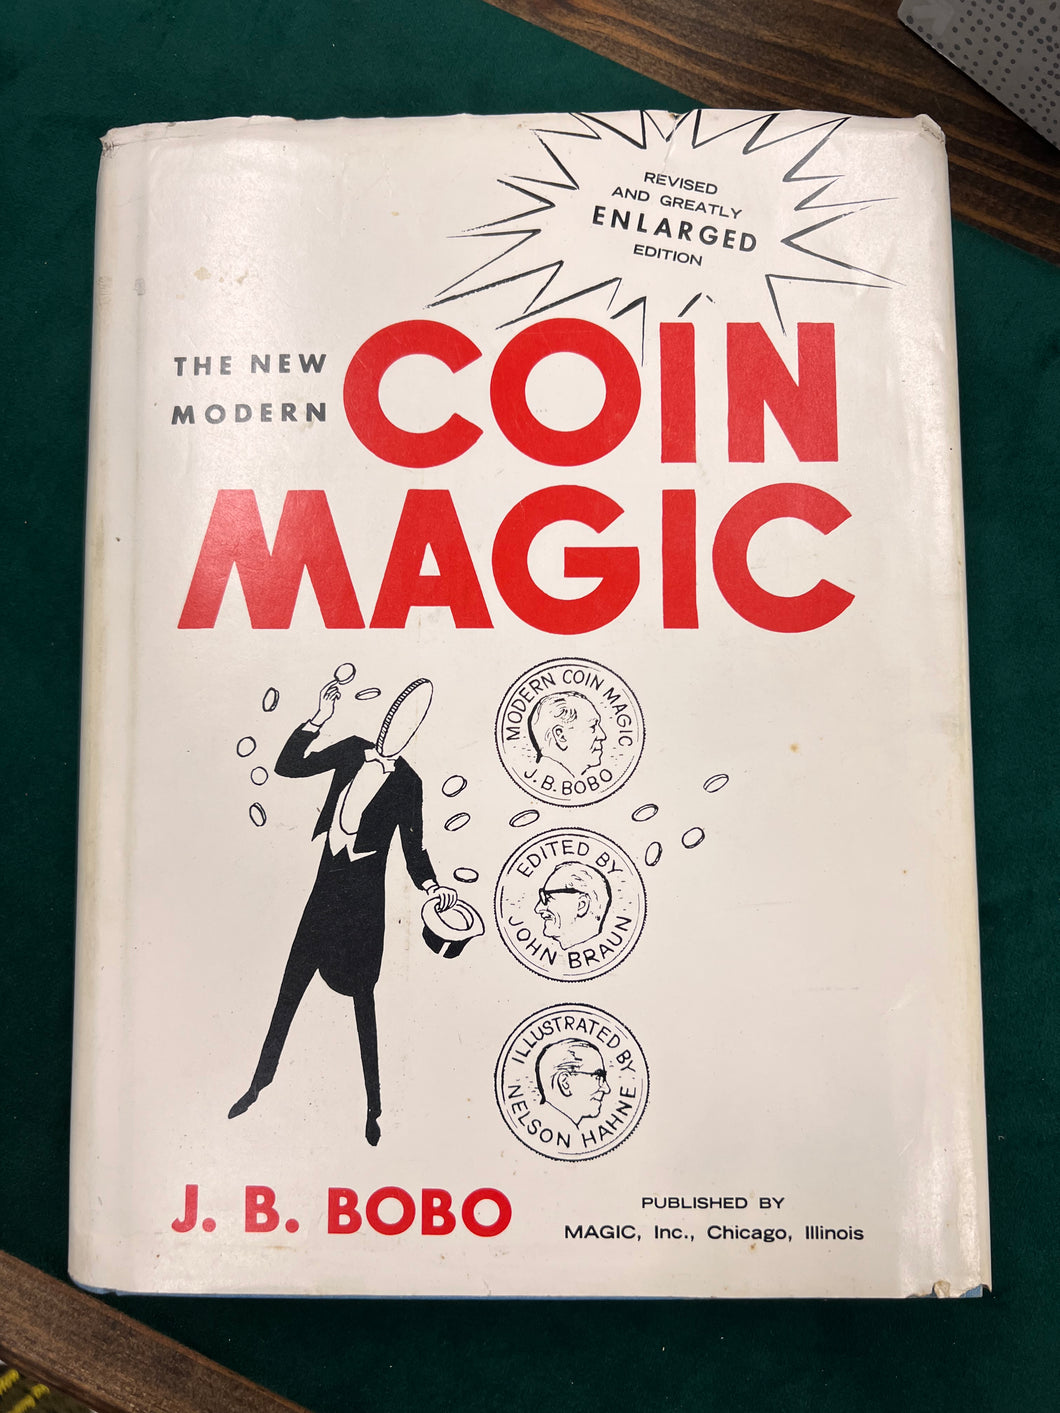 The New Modern Coin Magic by J.B. BOBO